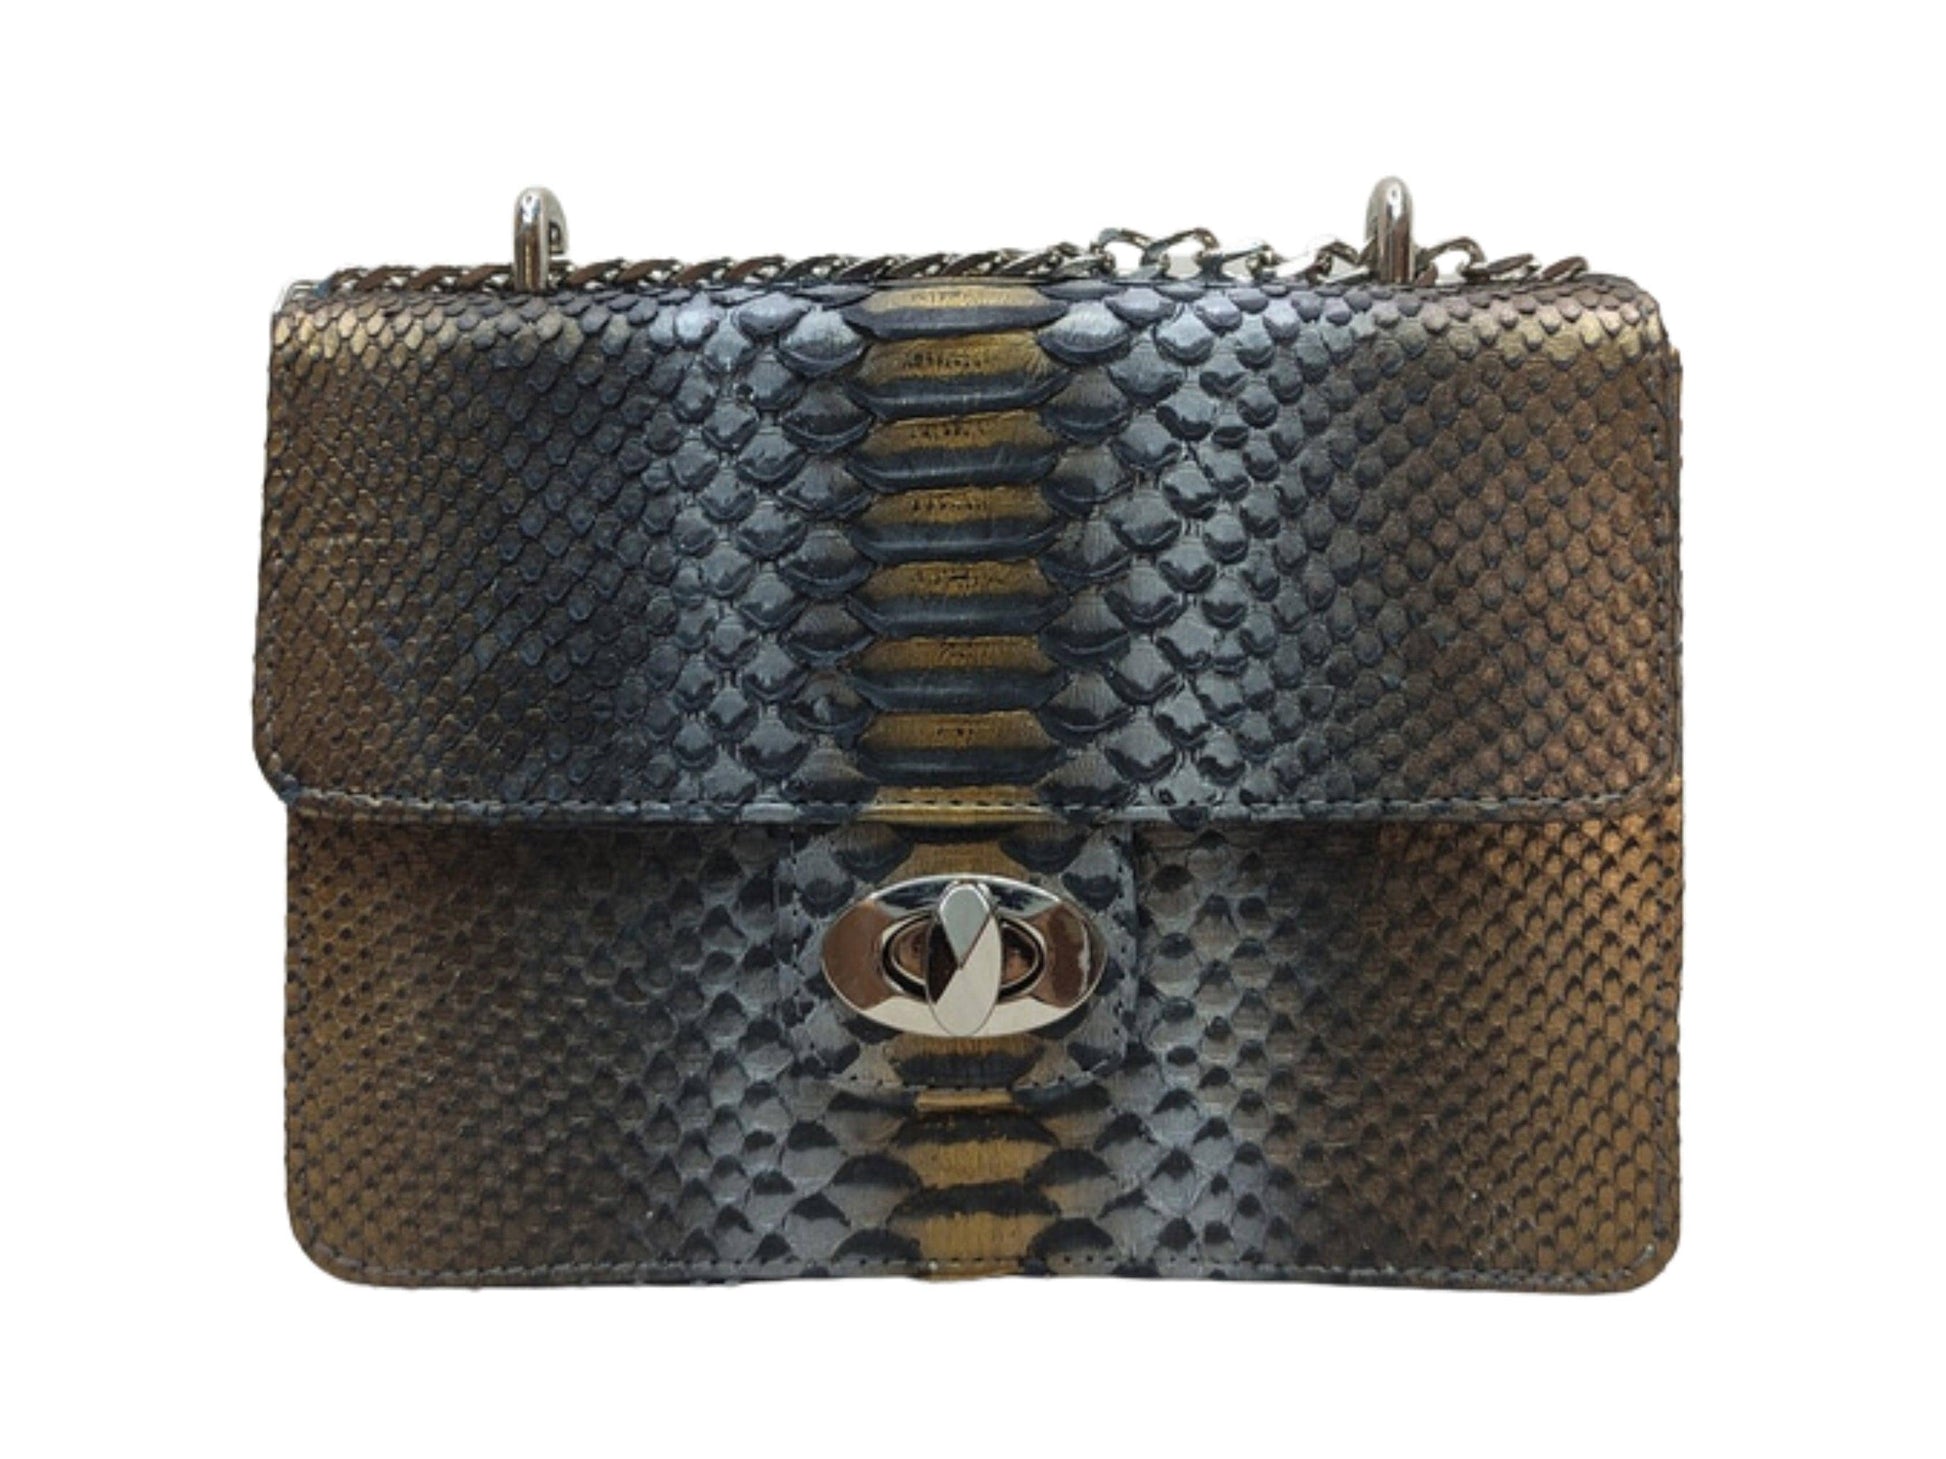 Python Bags Snakeskin Evening Handbag for Women Multi Color Python Jacket by LFM Fashion